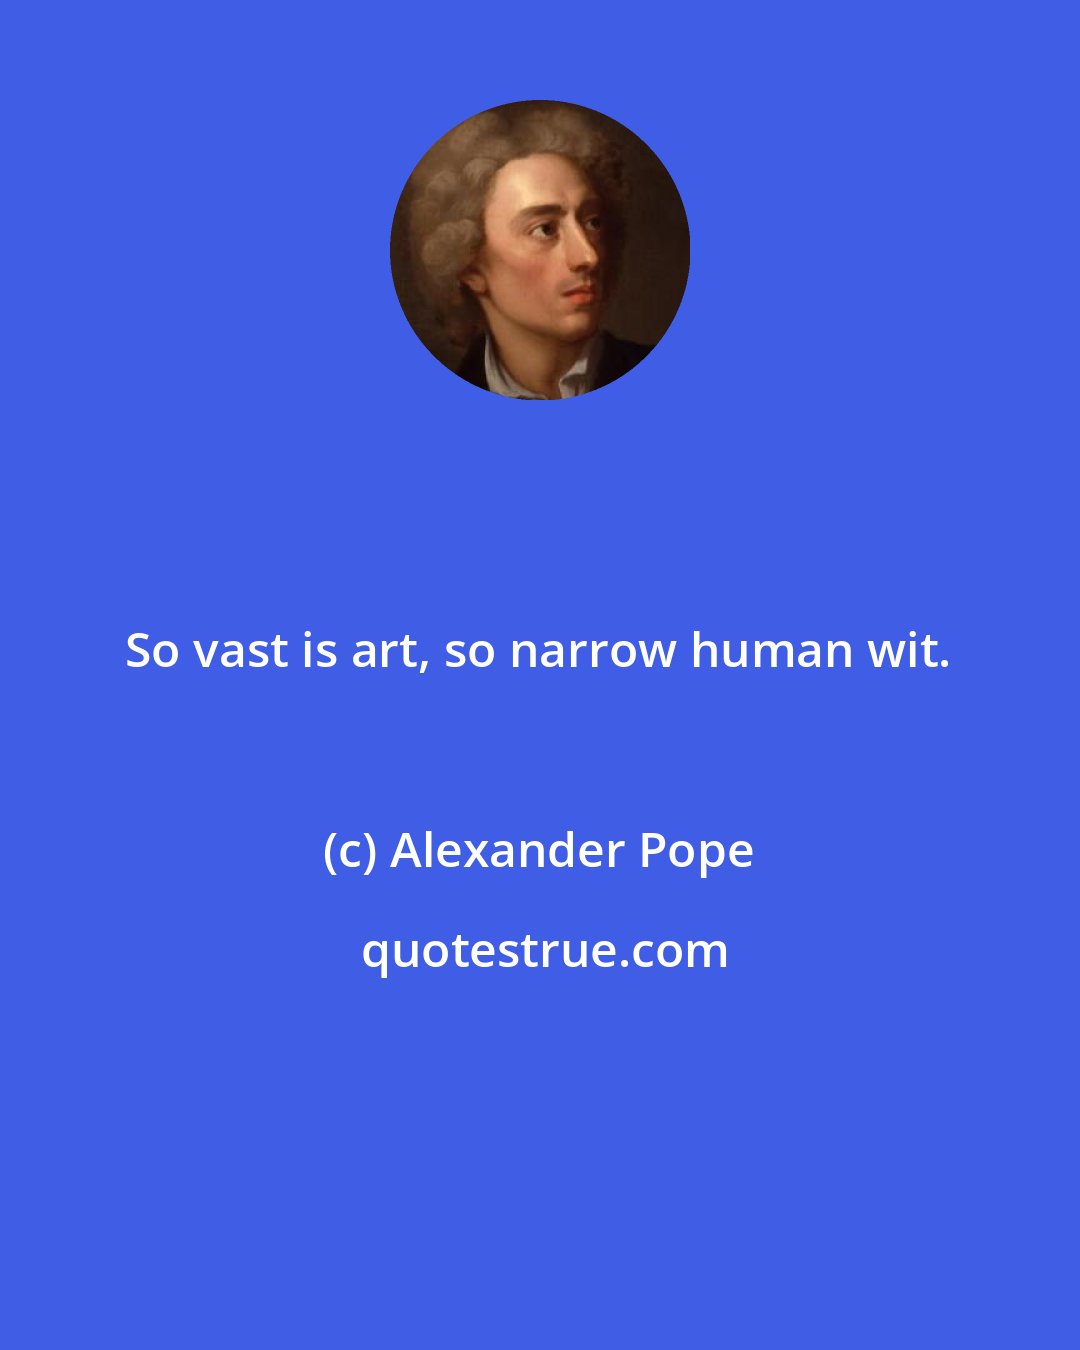 Alexander Pope: So vast is art, so narrow human wit.